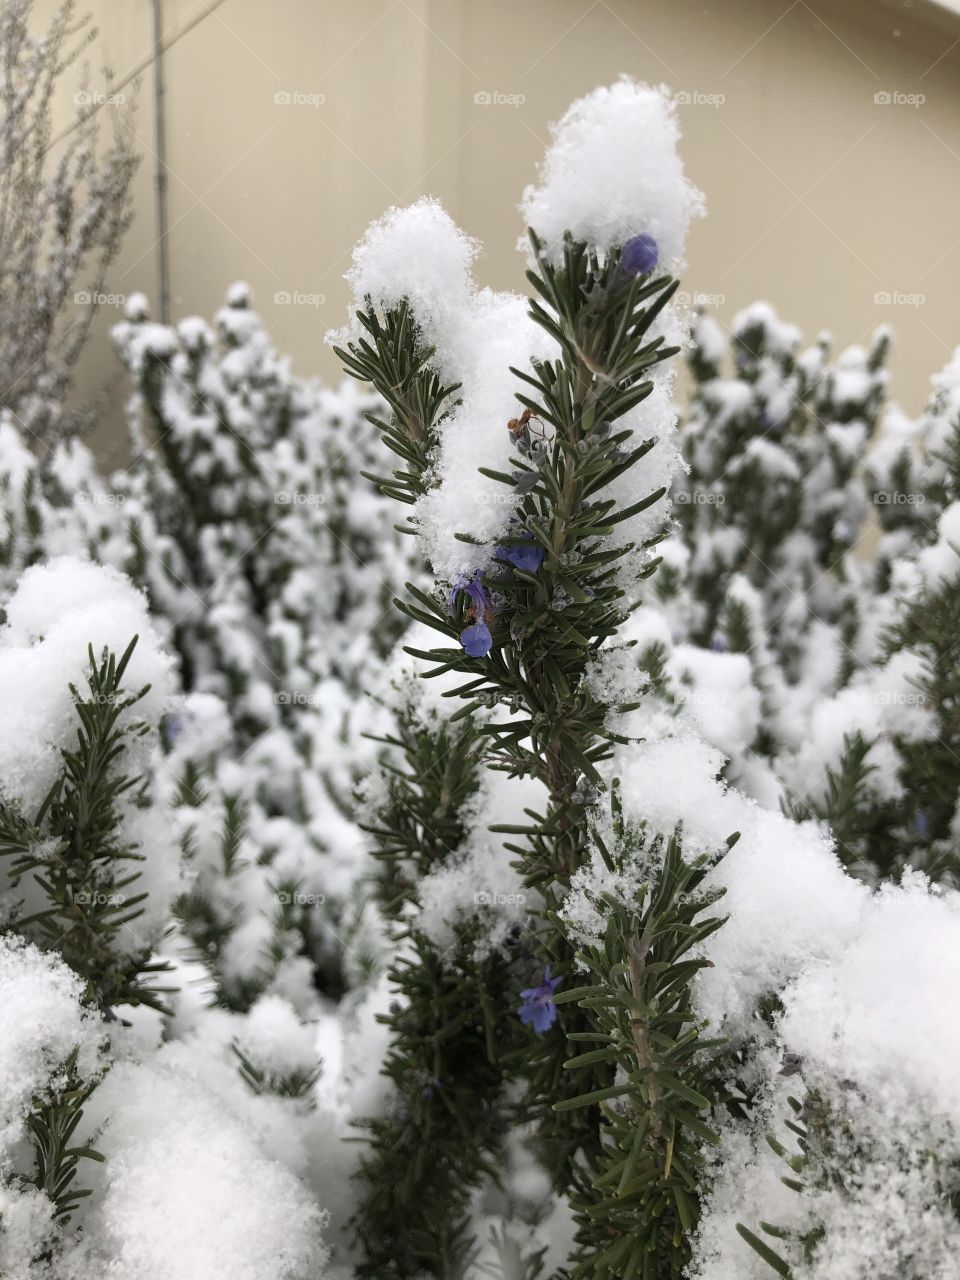 Rosemary in Winter